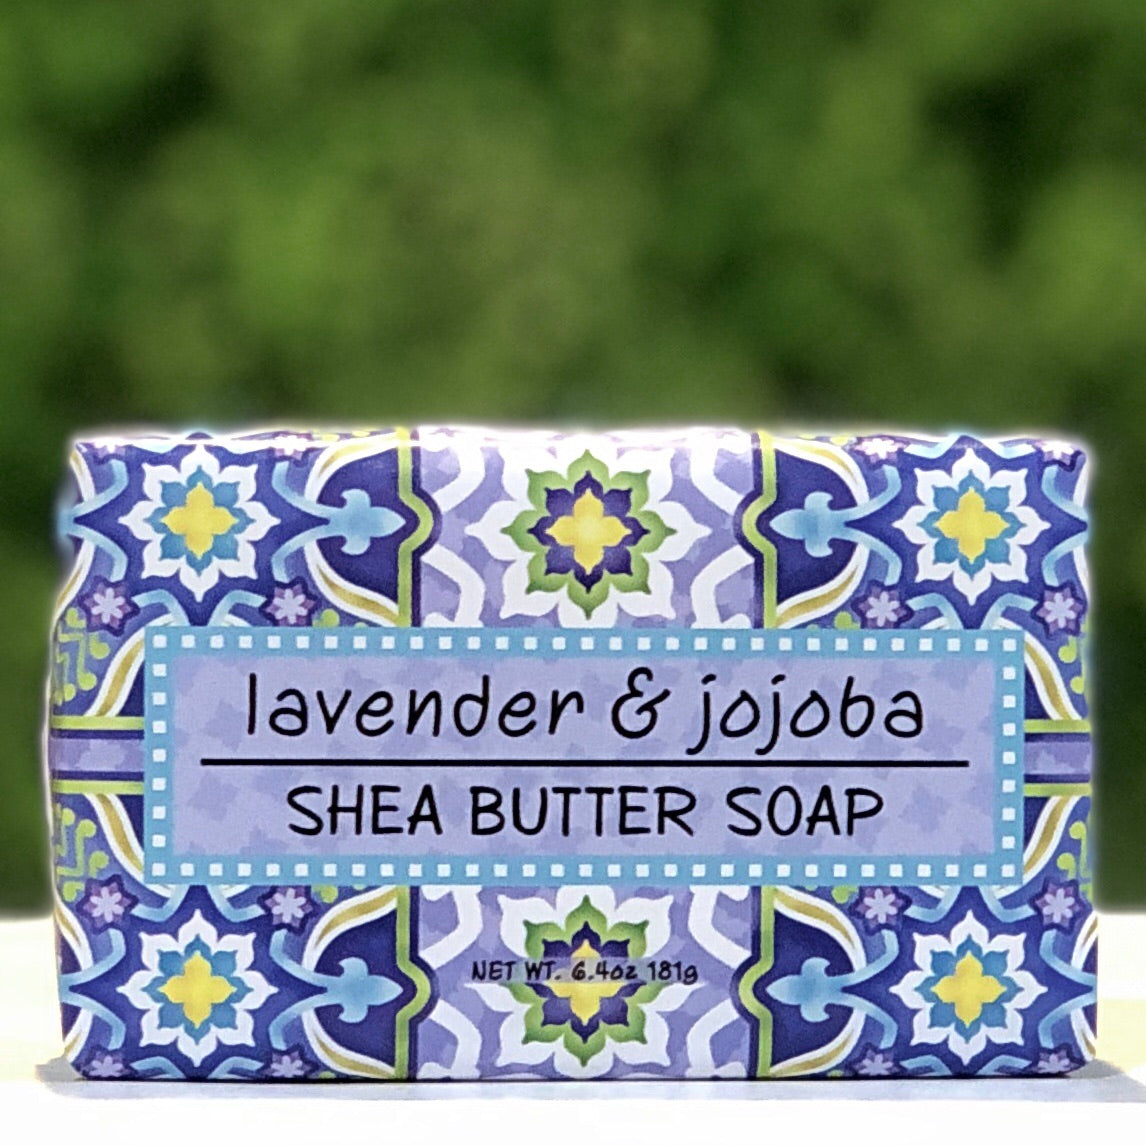 Lavender & Jojoba Garden Bar Soap by Greenwich Bay Trading Company